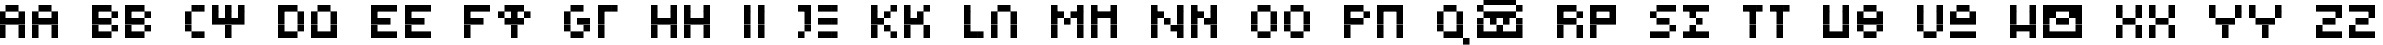 Пример написания английского алфавита шрифтом GreekBearTinyE